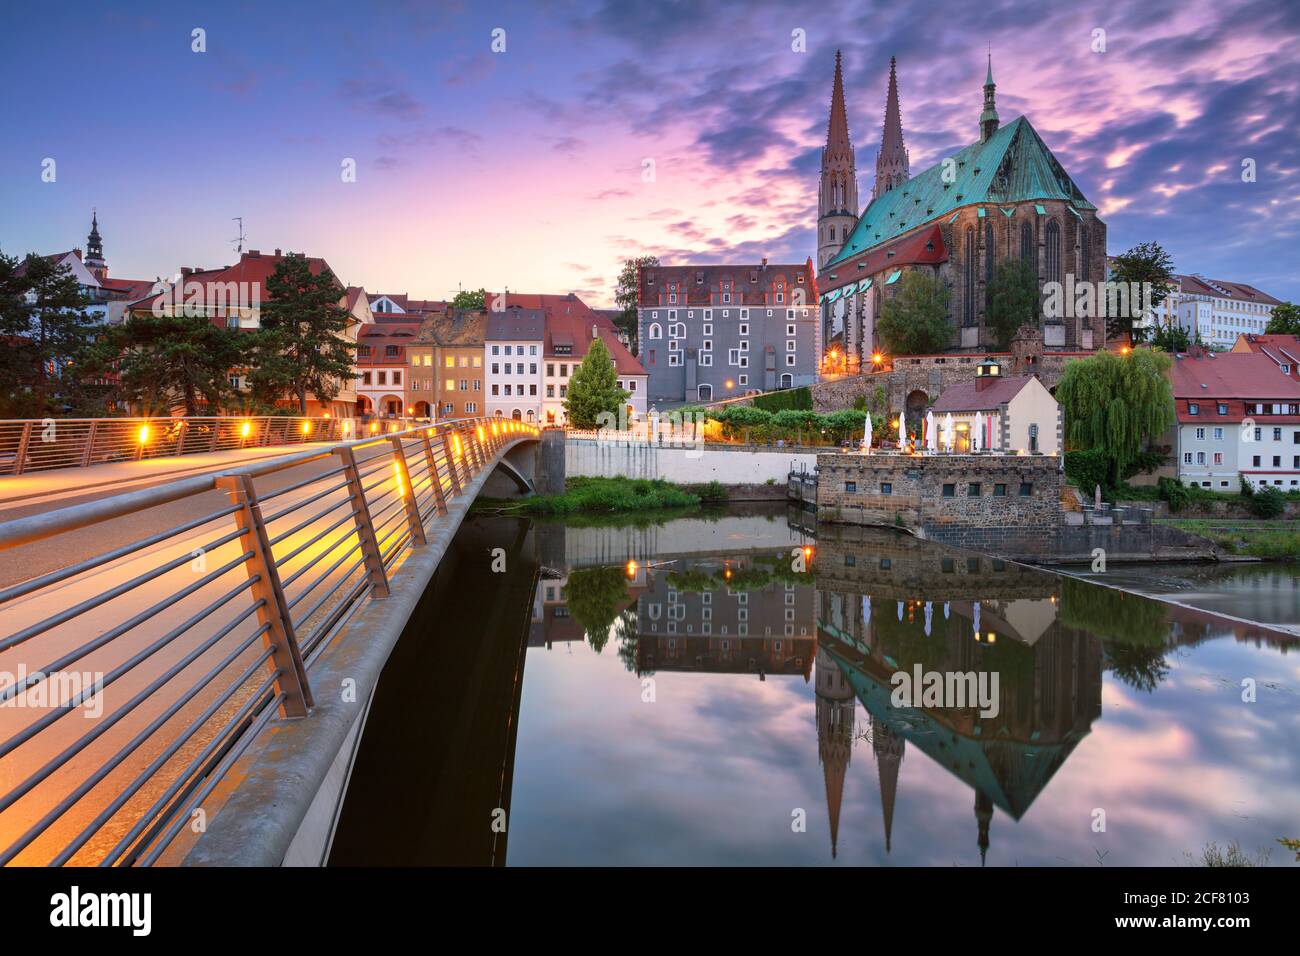 Gorlitz, Germany. Cityscape image of historical downtown of Gorlitz, Germany during dramatic sunset. Stock Photo